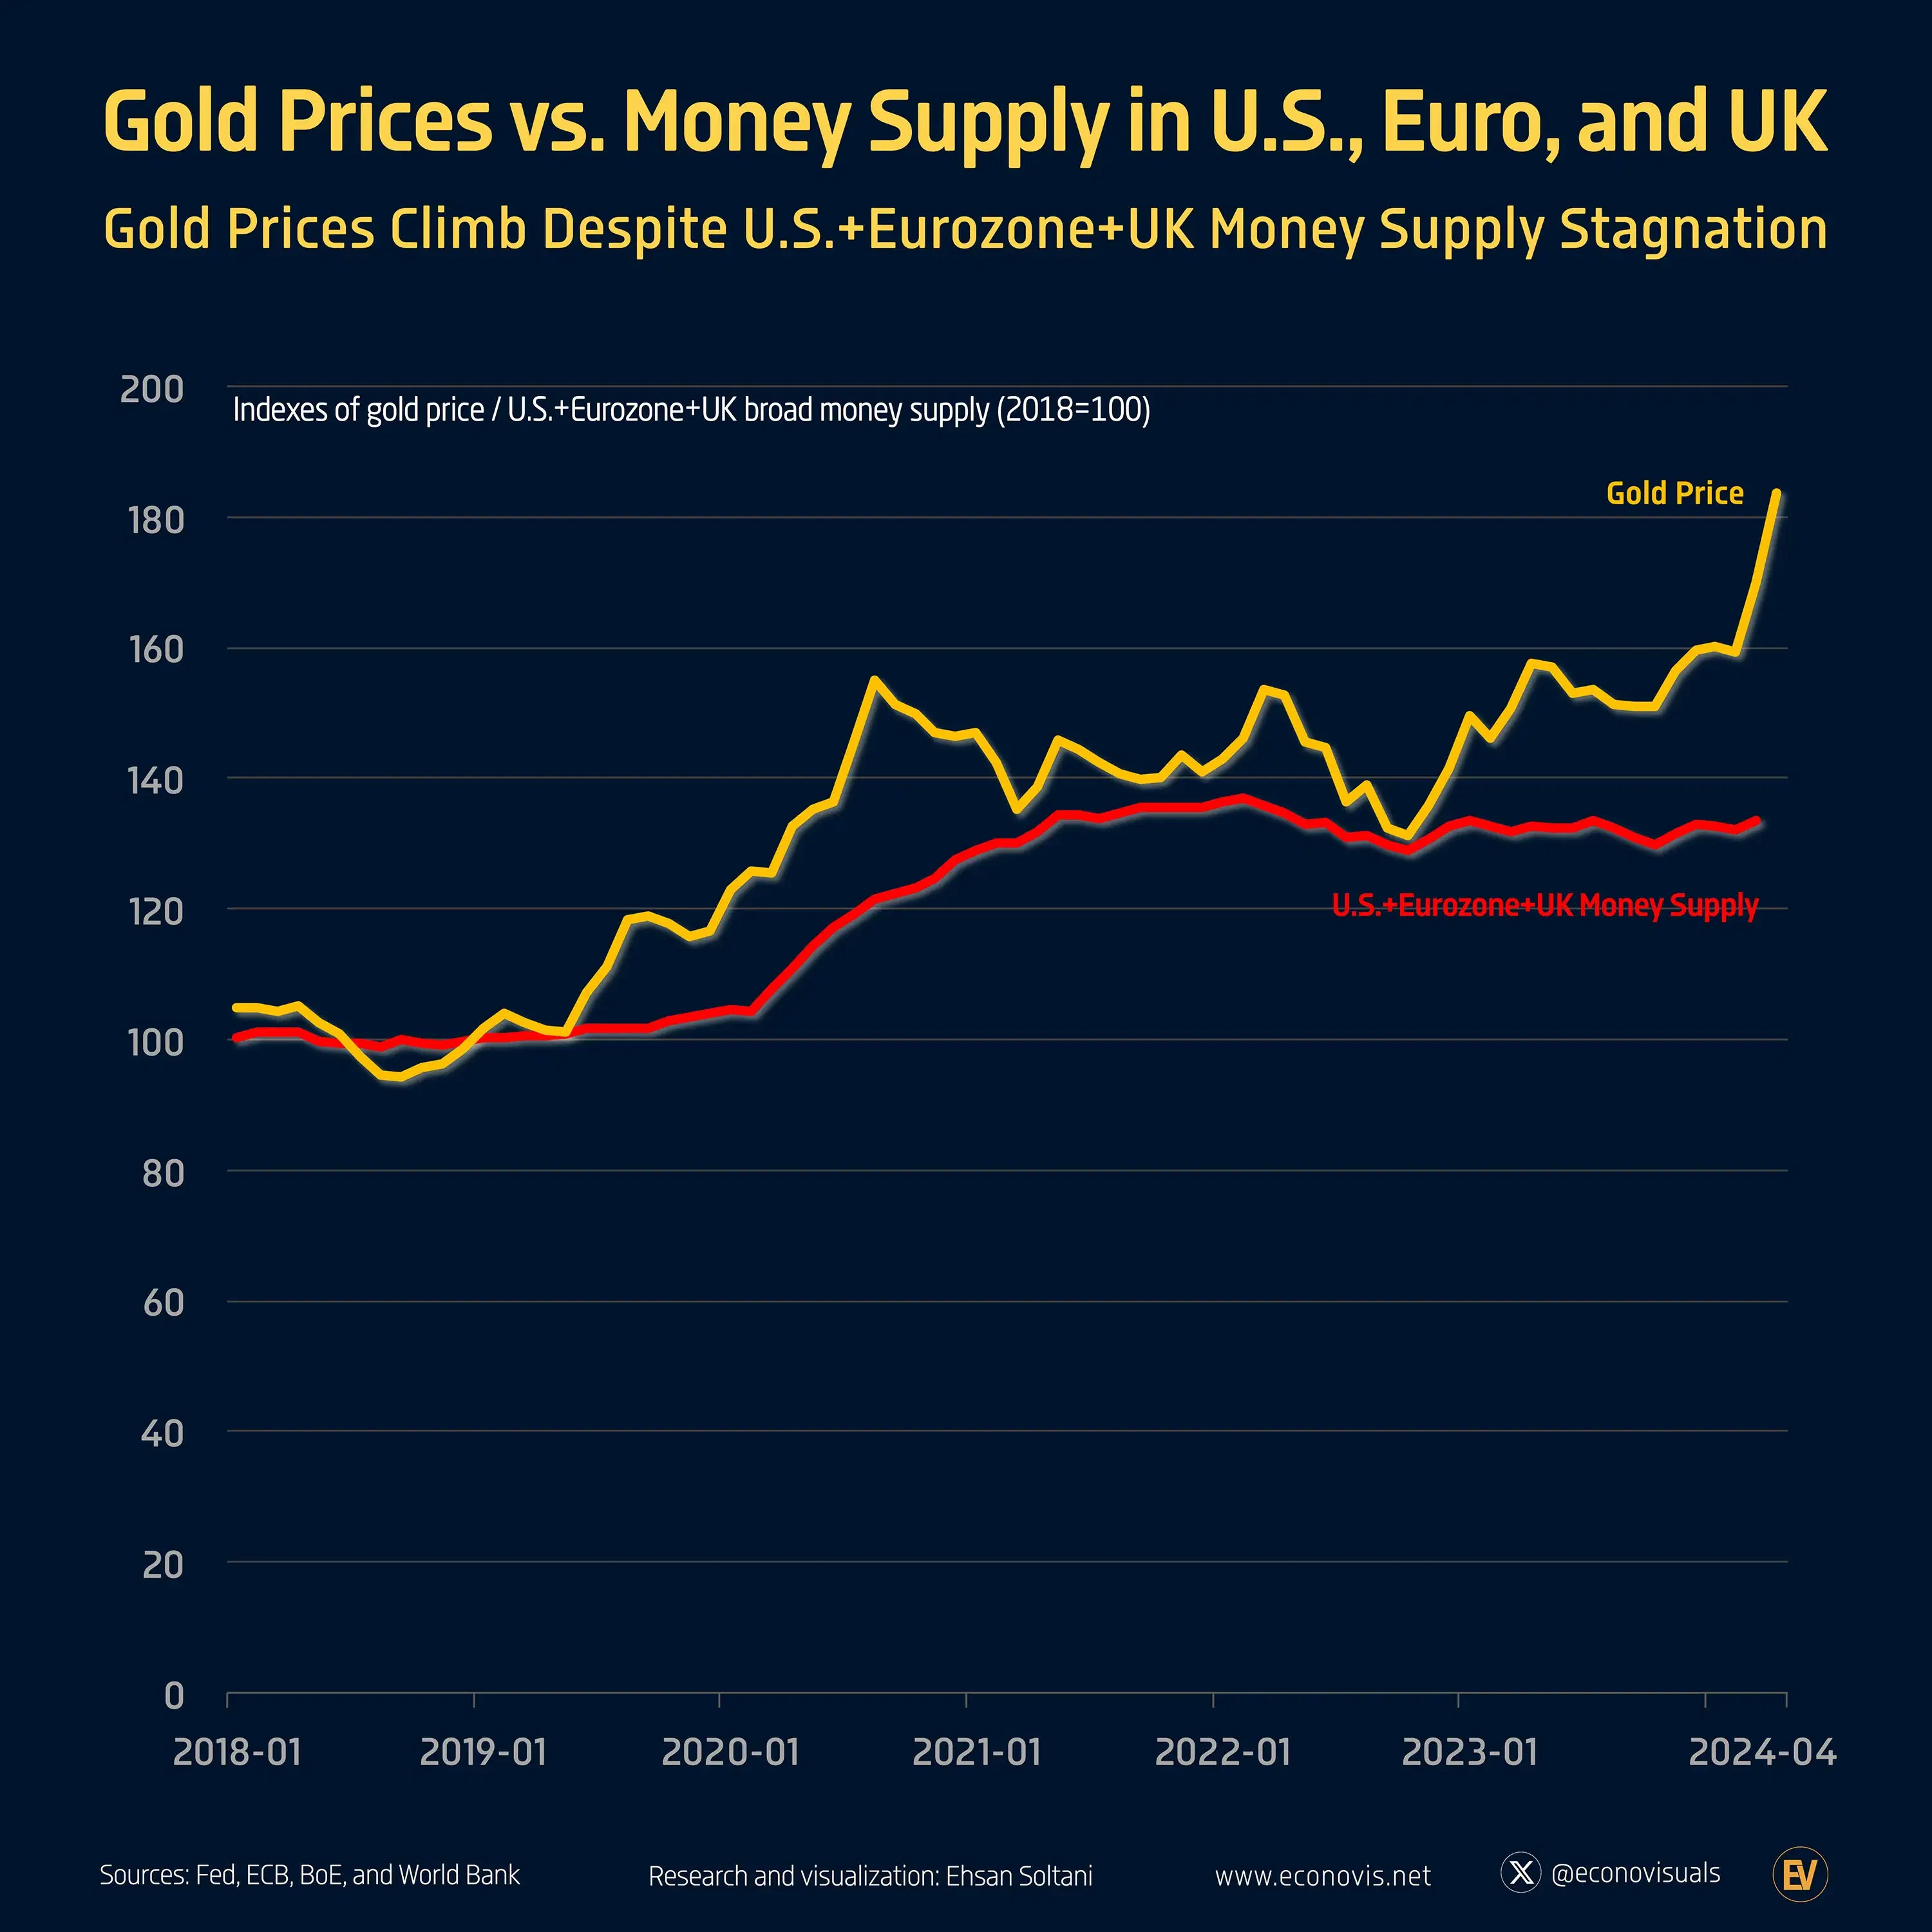 Gold Prices Climb Despite U.S.+Eurozone+UK Money Supply Stagnation